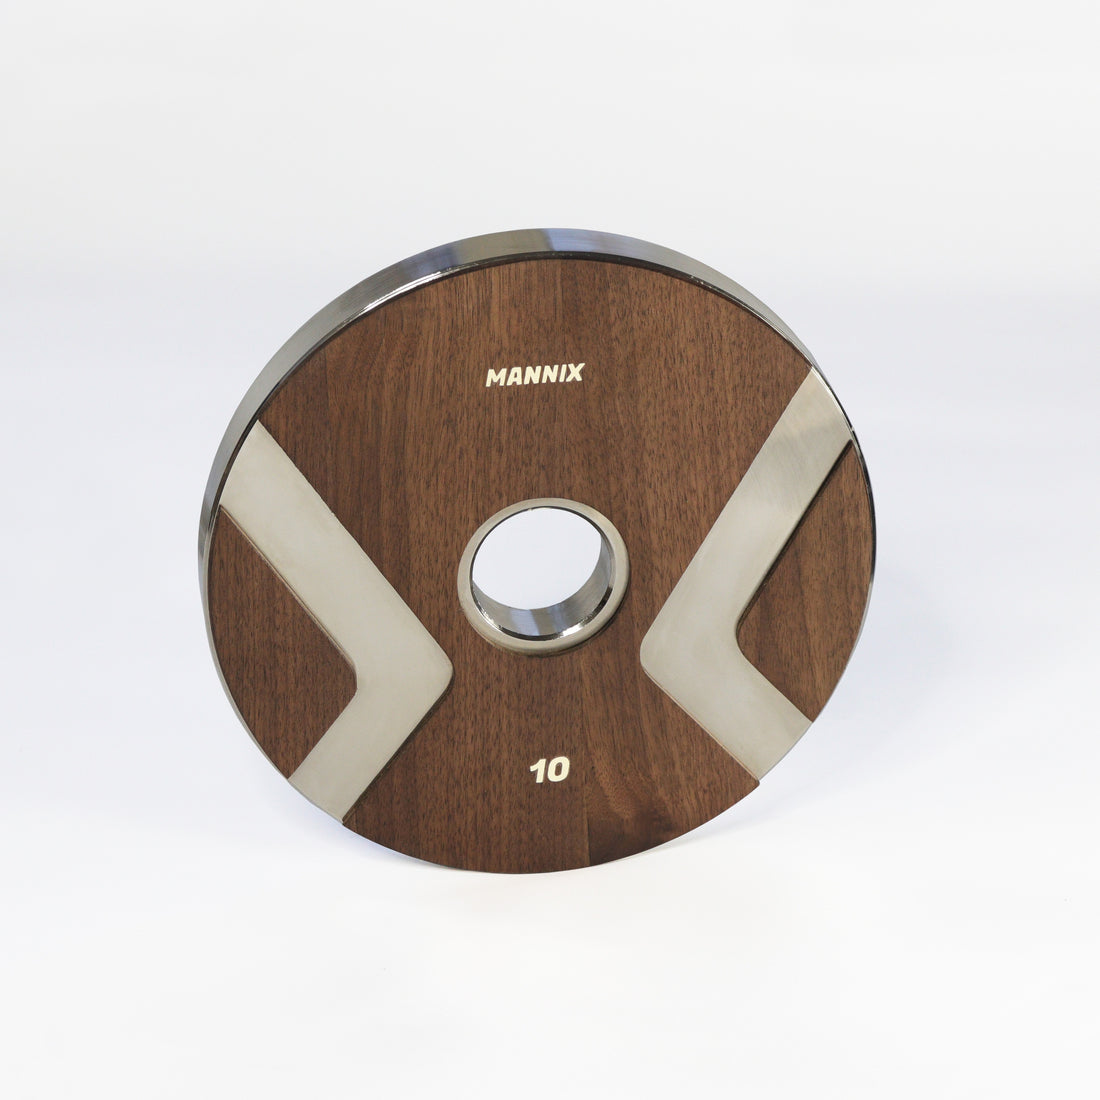 Mannix Sports 10kg Nickel Plated Walnut-Faced Weight Plates - Pair